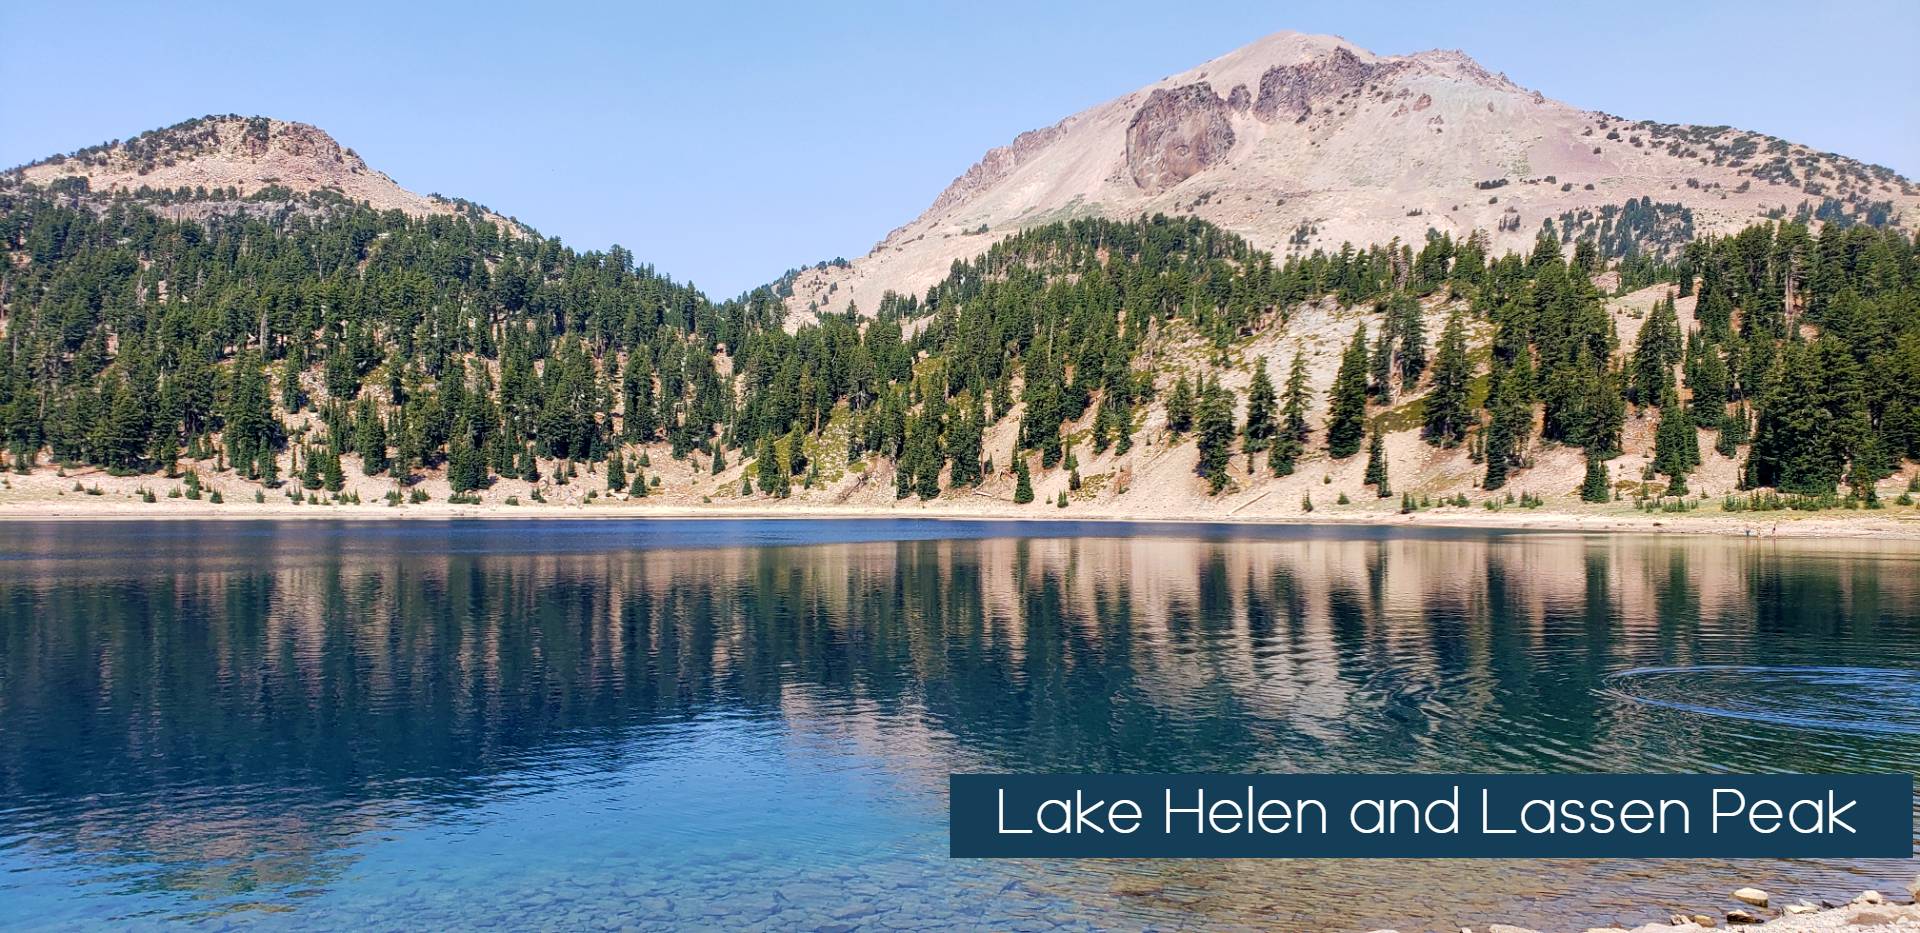 Lake Helen and Lassen Peak2020